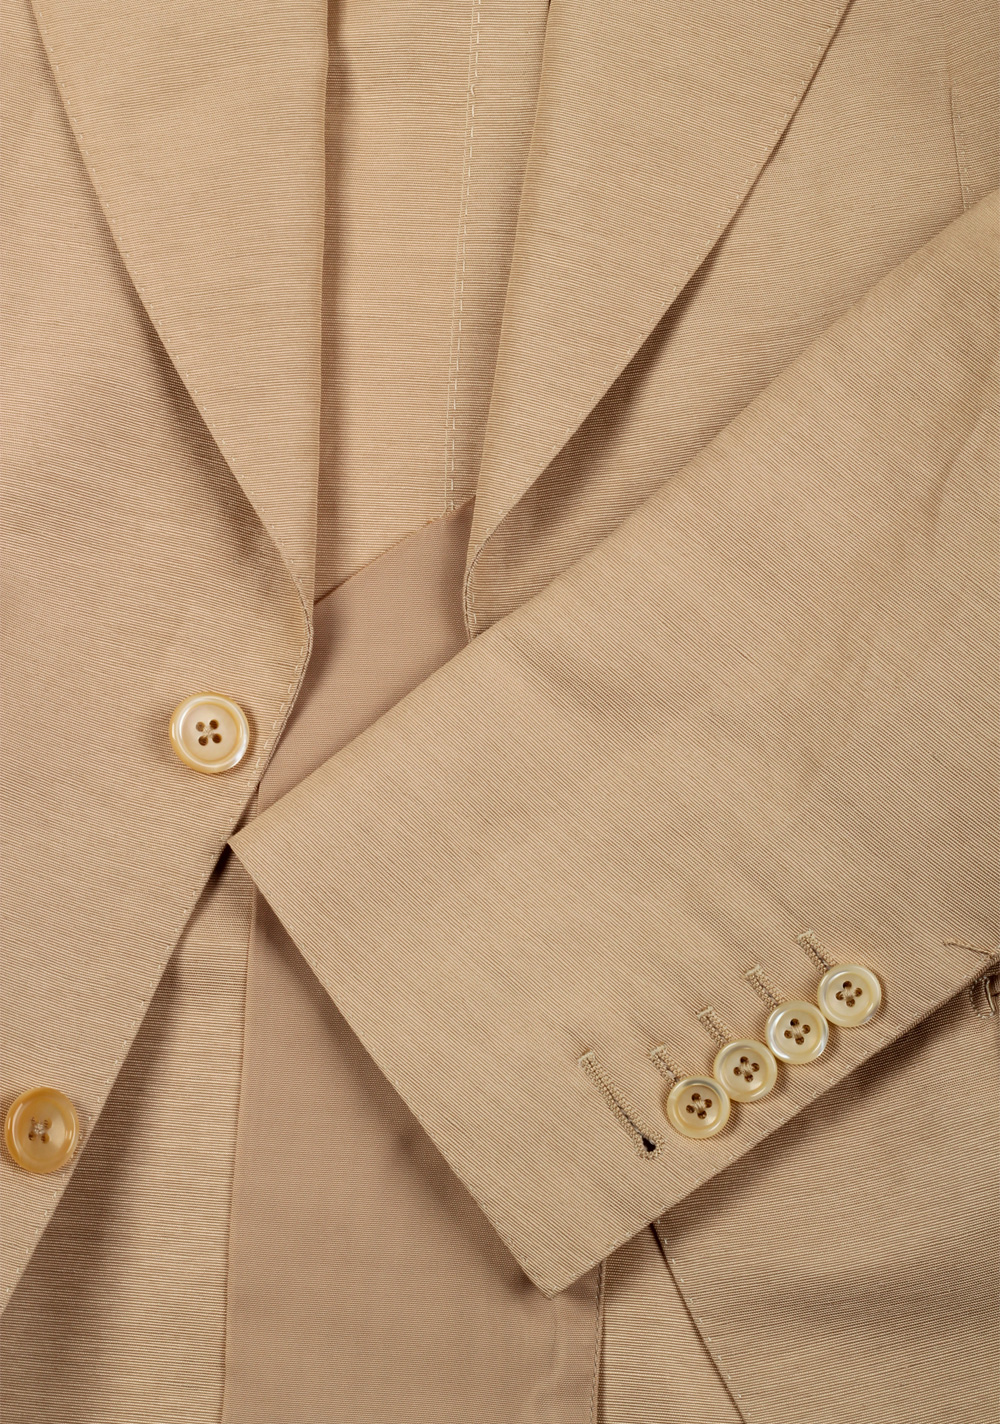 TOM FORD Atticus Sand Suit Size 46 / 36R U.S. In Linen Silk | Costume Limité